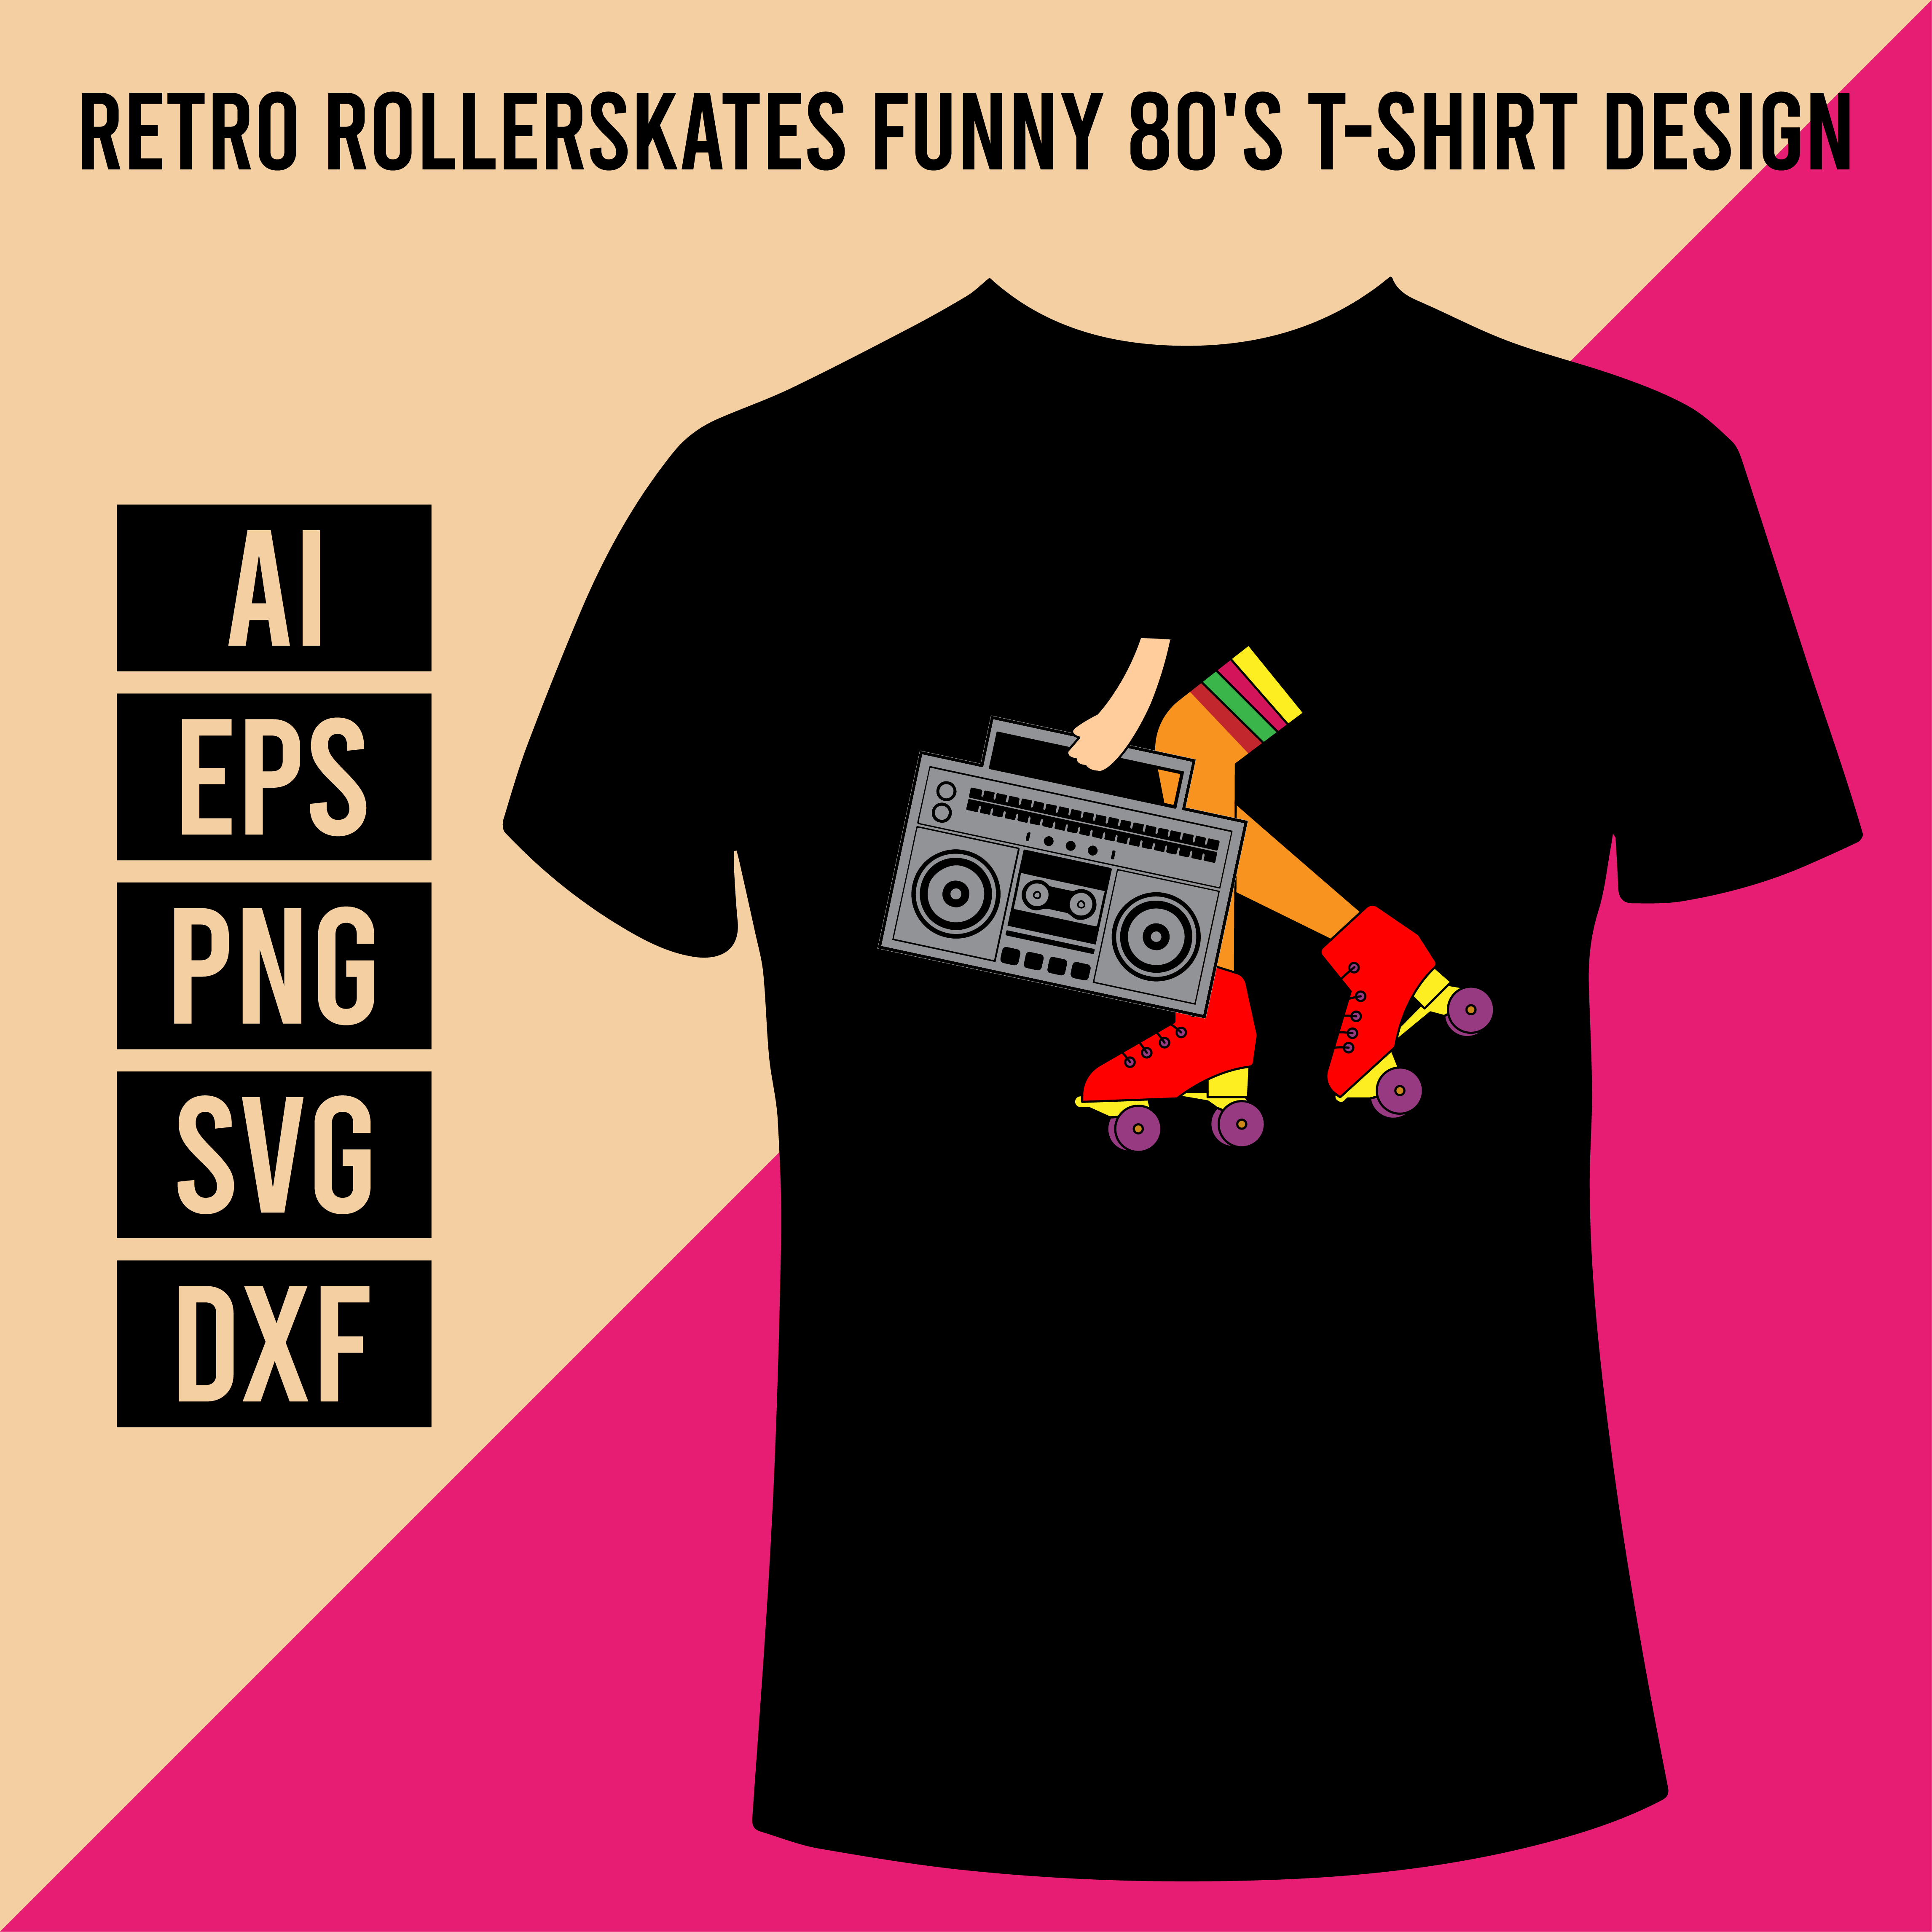 Retro Rollerskates Funny 80's T-Shirt Design cover image.